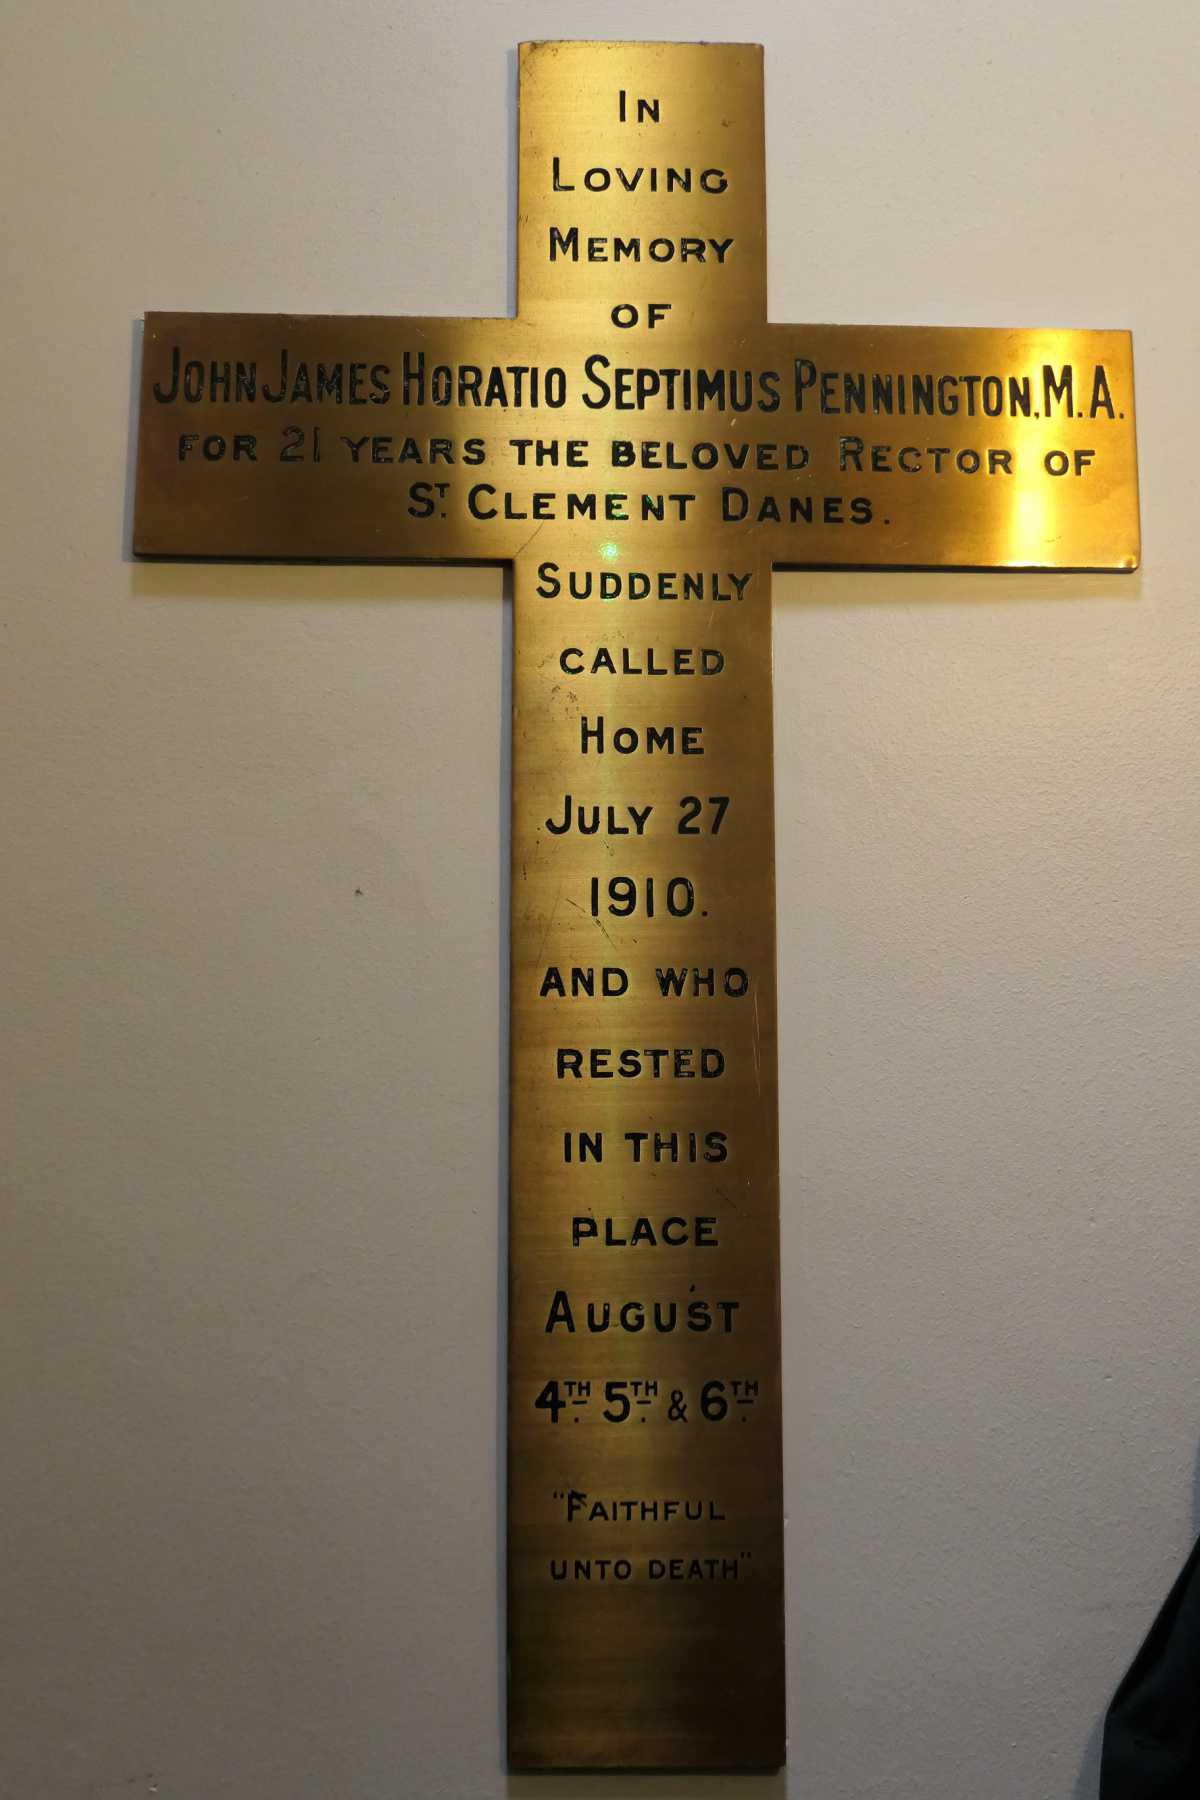 St Clement Danes - more